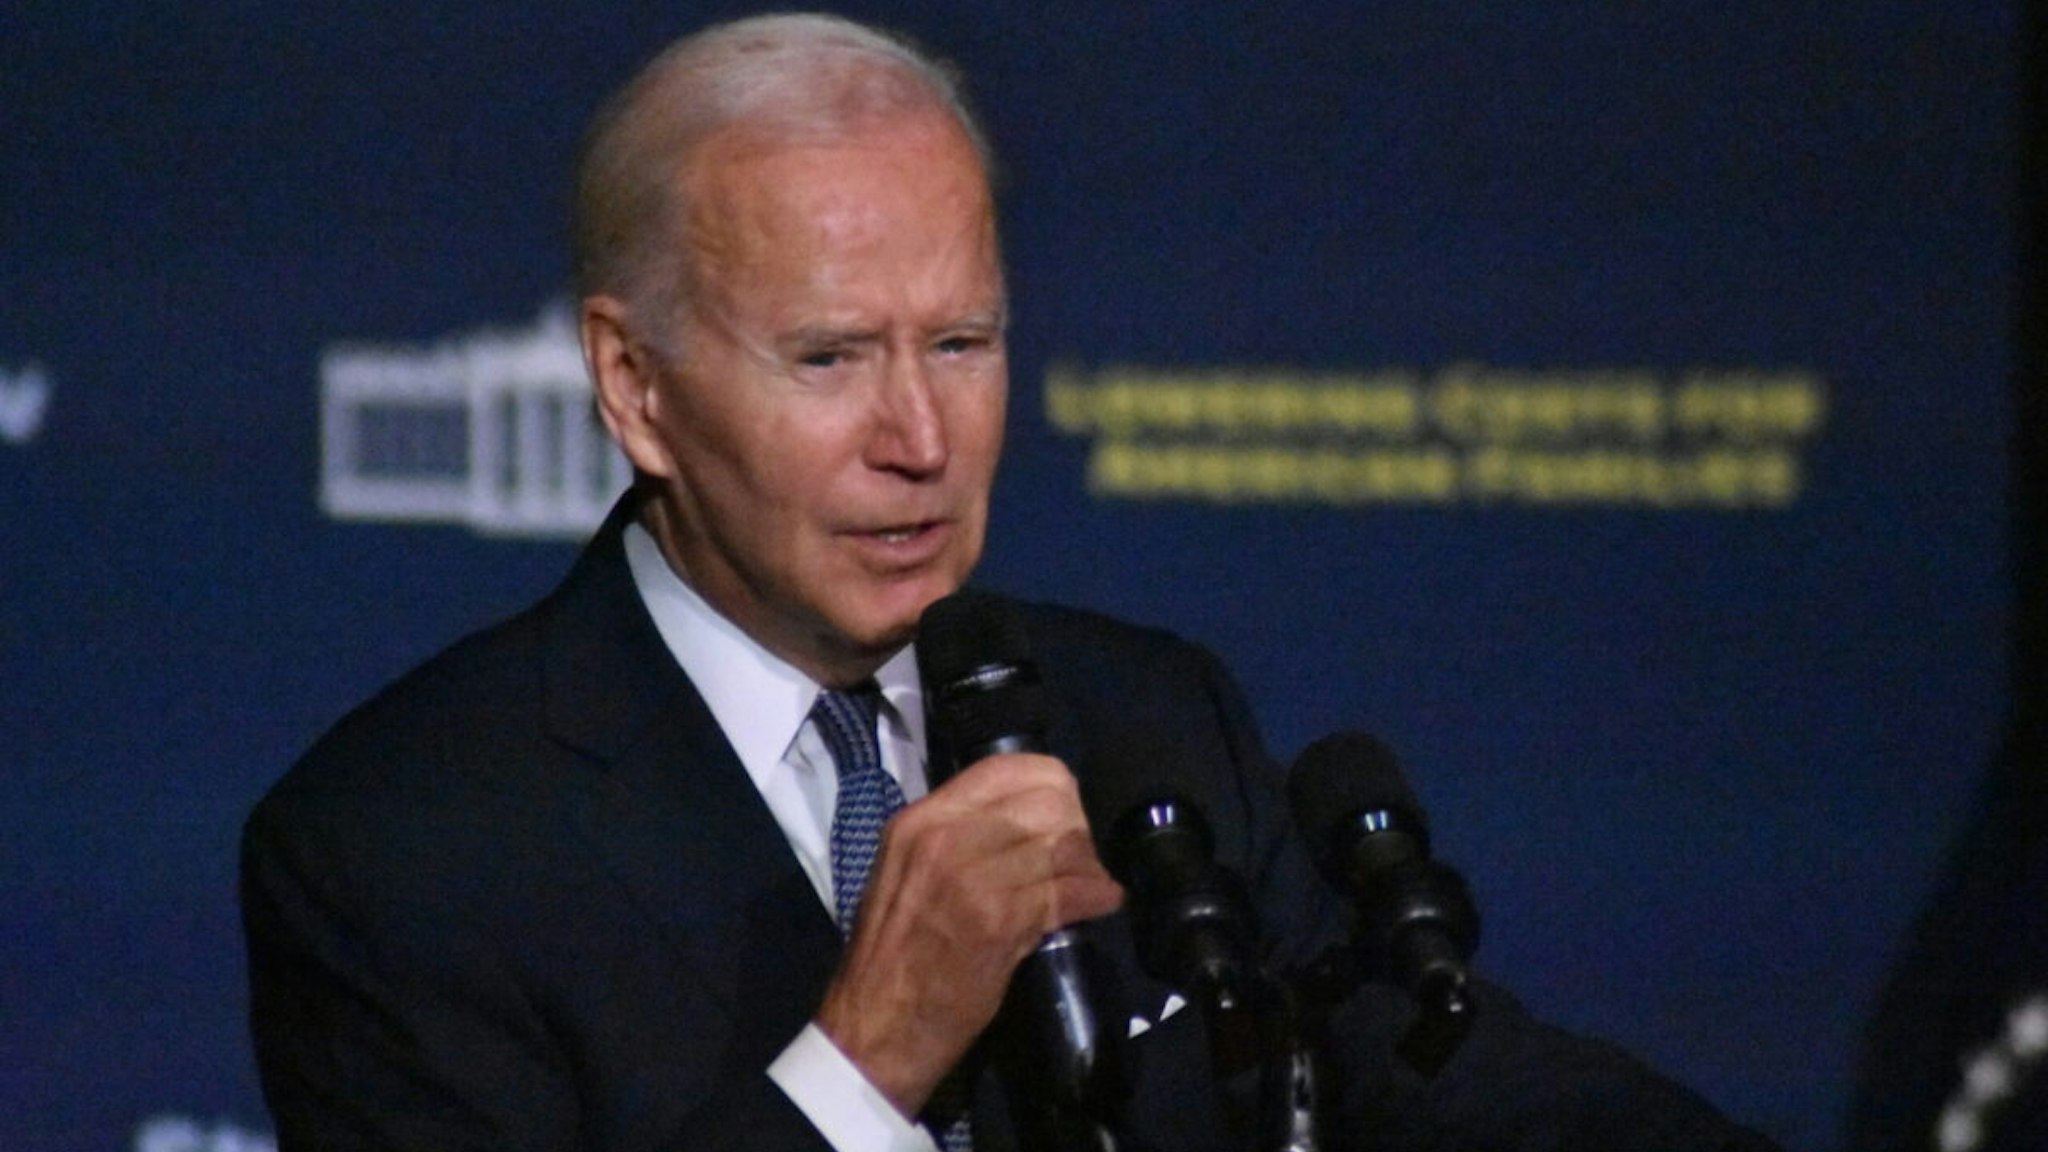 U.S. President Joe Biden delivers remarks on Student Debt Relief at Delaware State University in Dover, United States on October 21, 2022.